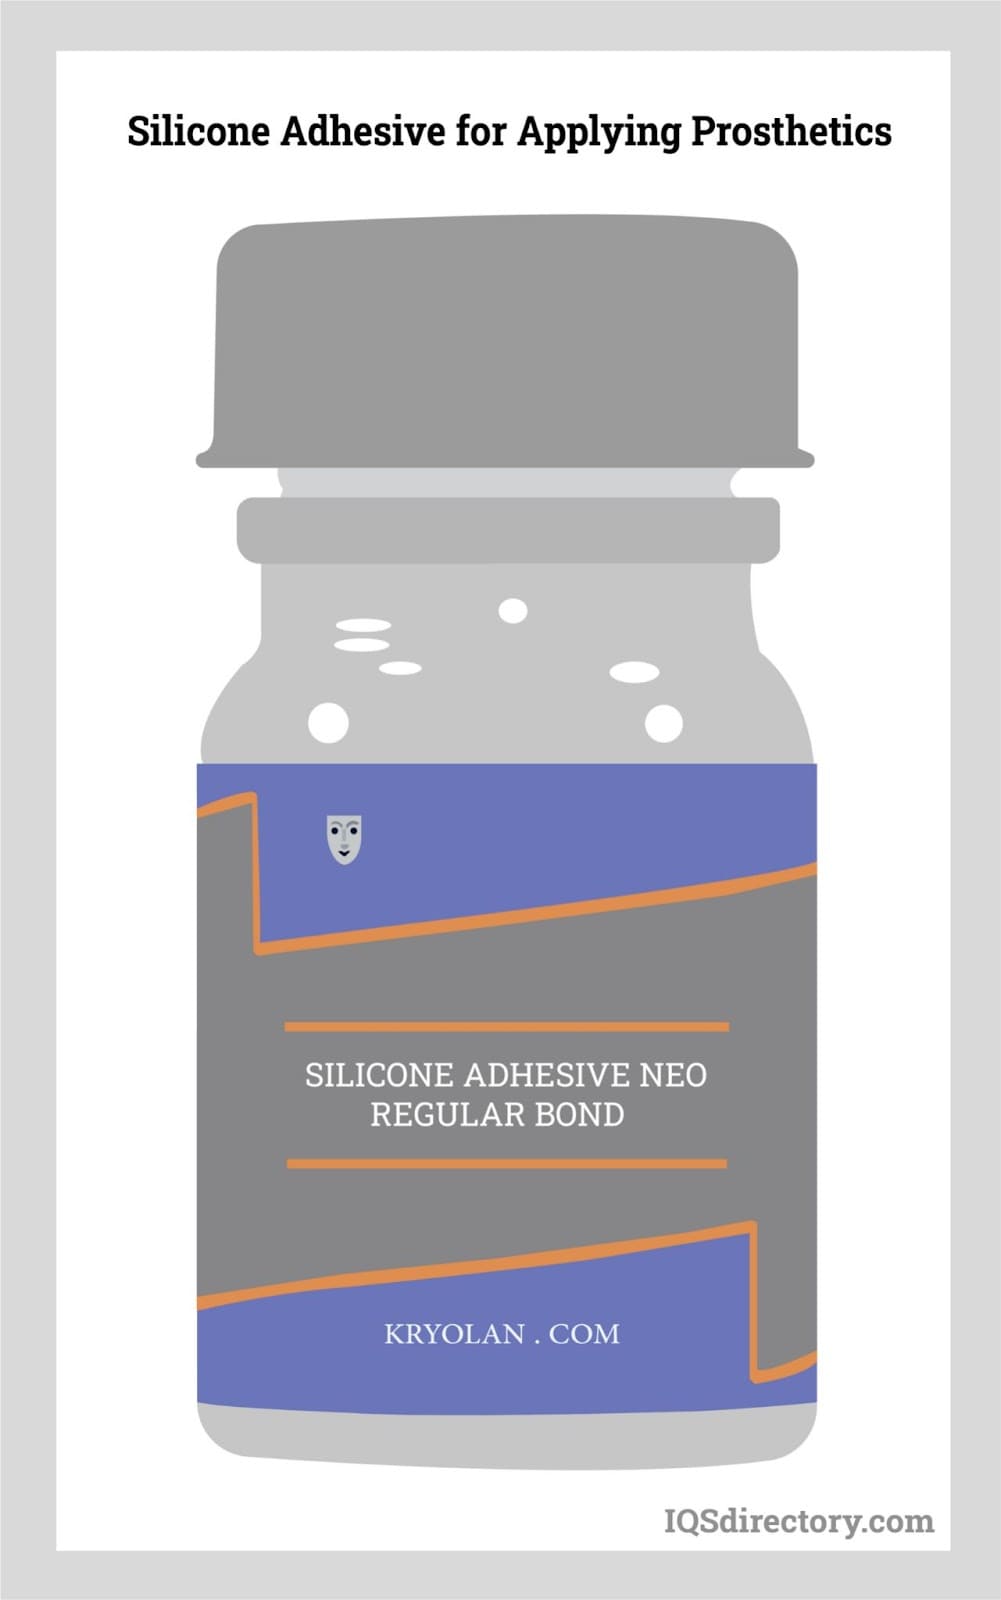 Silicone Adhesive for Applying Prosthetics